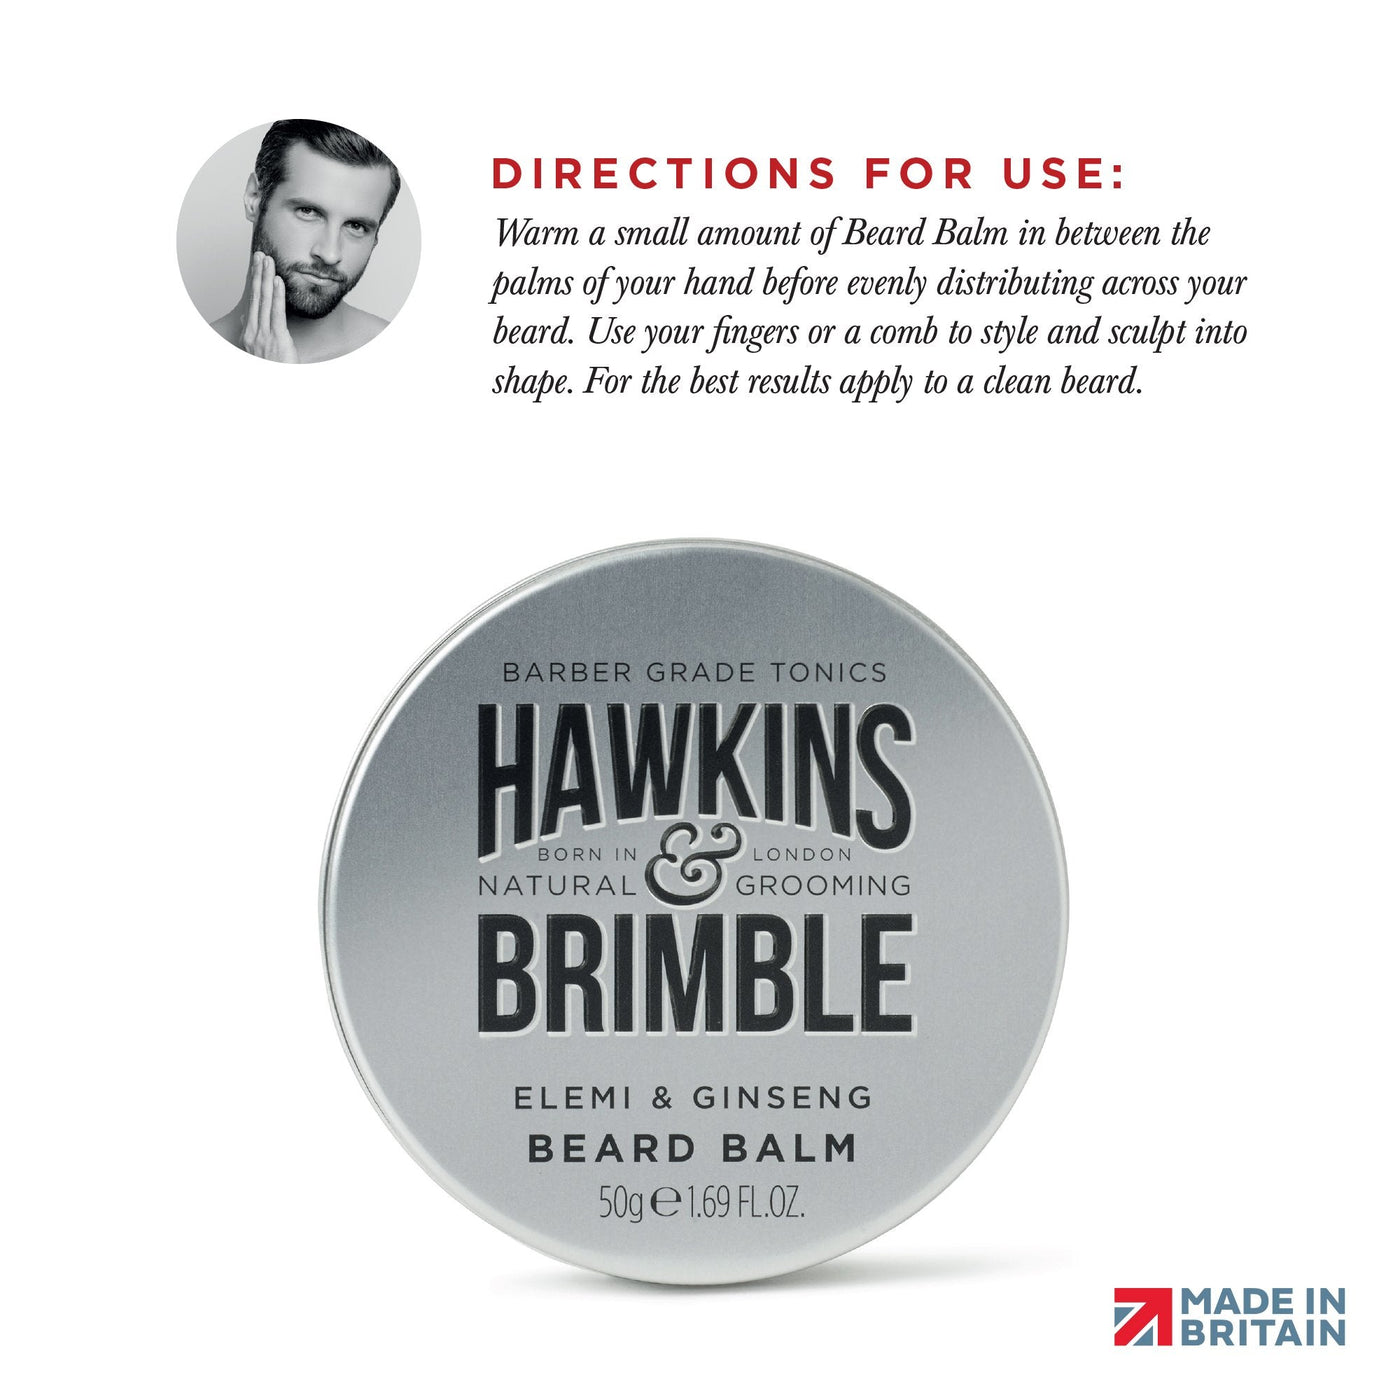 Beard Balm - Beard Care - Hawkins & Brimble Barbershop Male Grooming Products for Beards and Hair